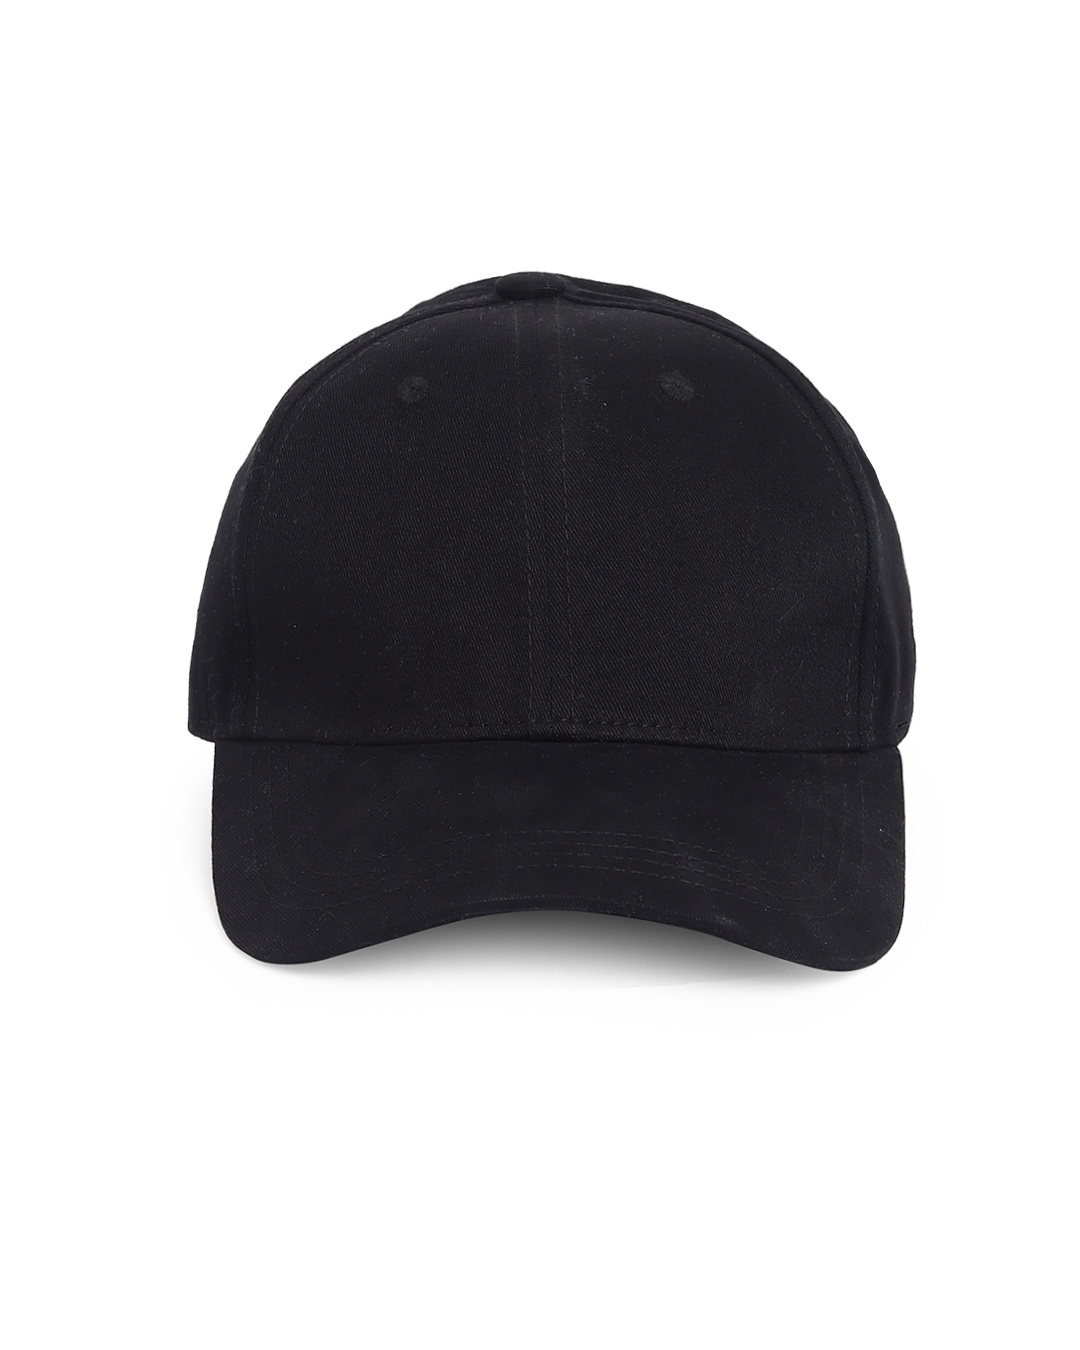 Shop Plain Black Baseball Cap-Back